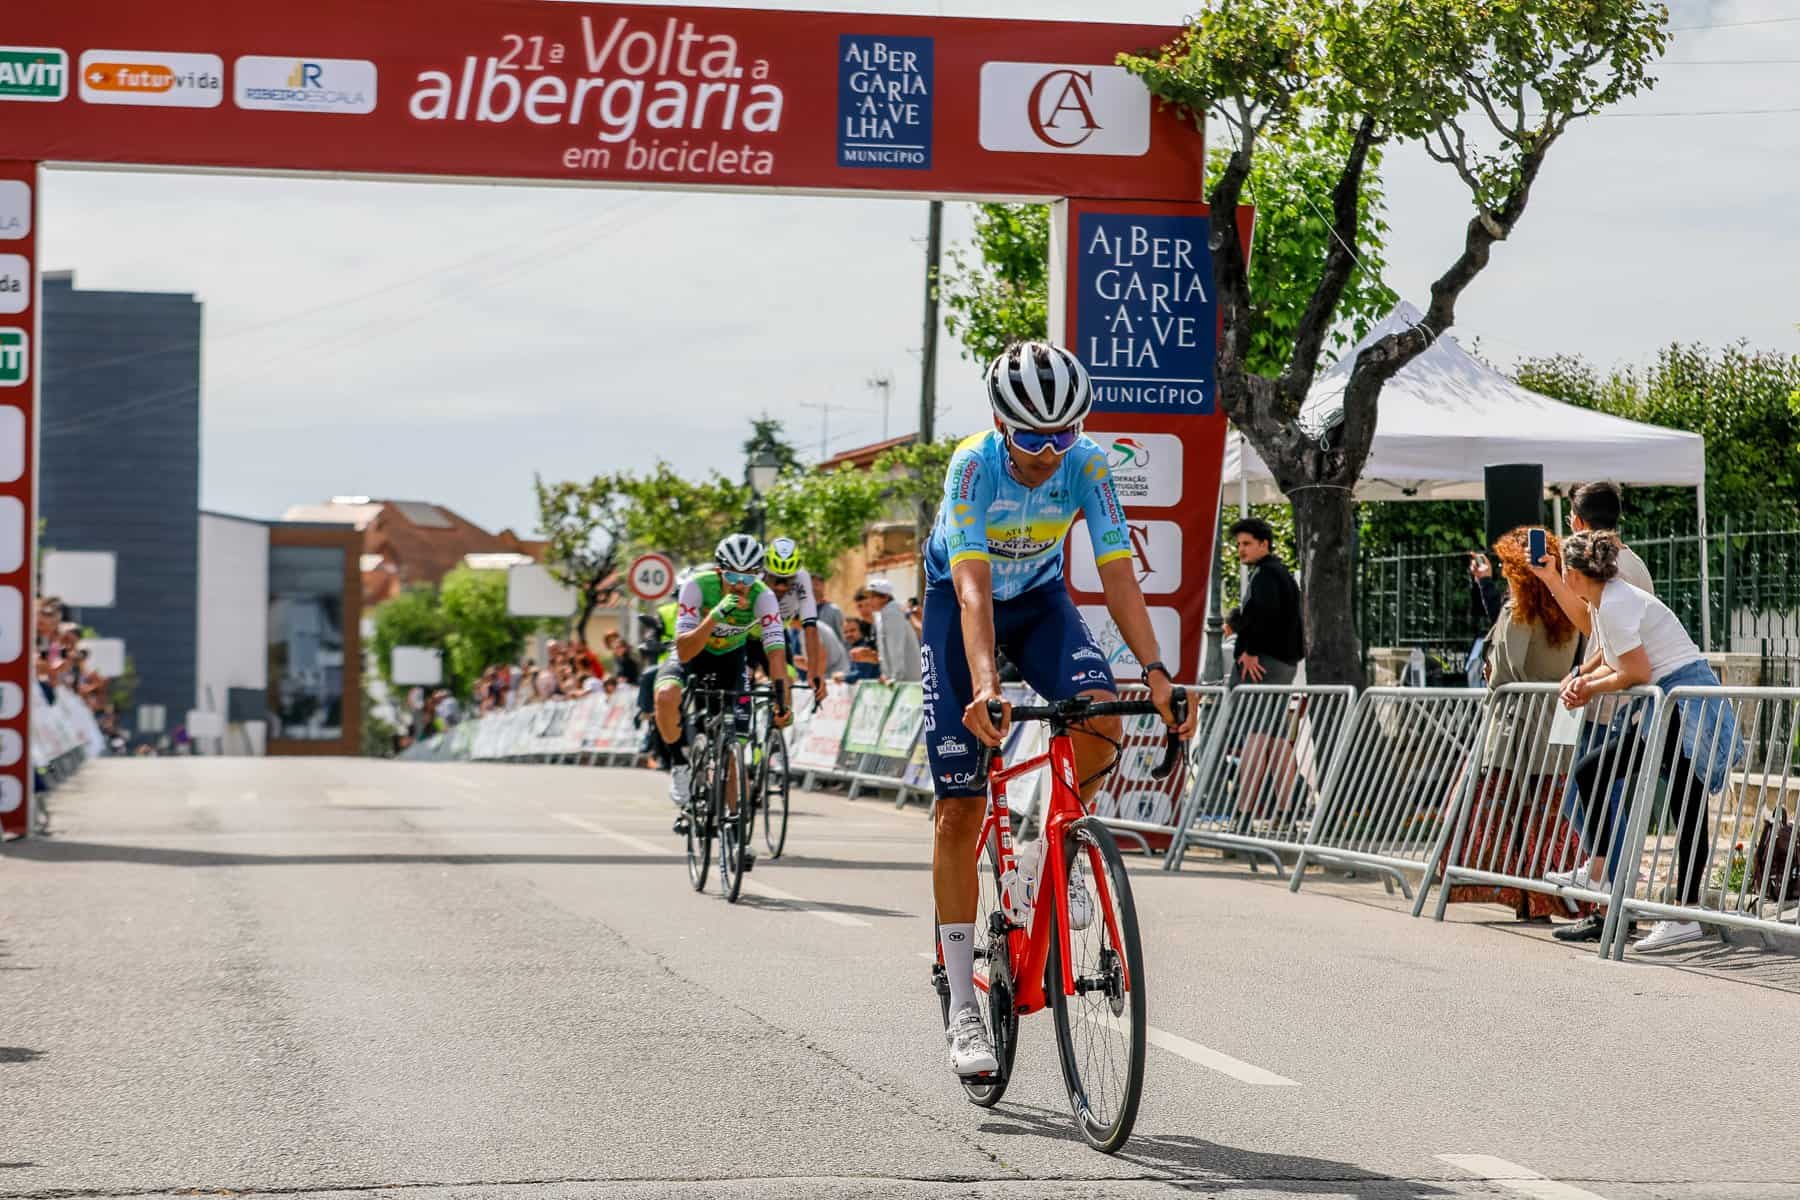 Clube de Ciclismo de Tavira - CLÁSSICA DE ALBERGARIA 2022 17